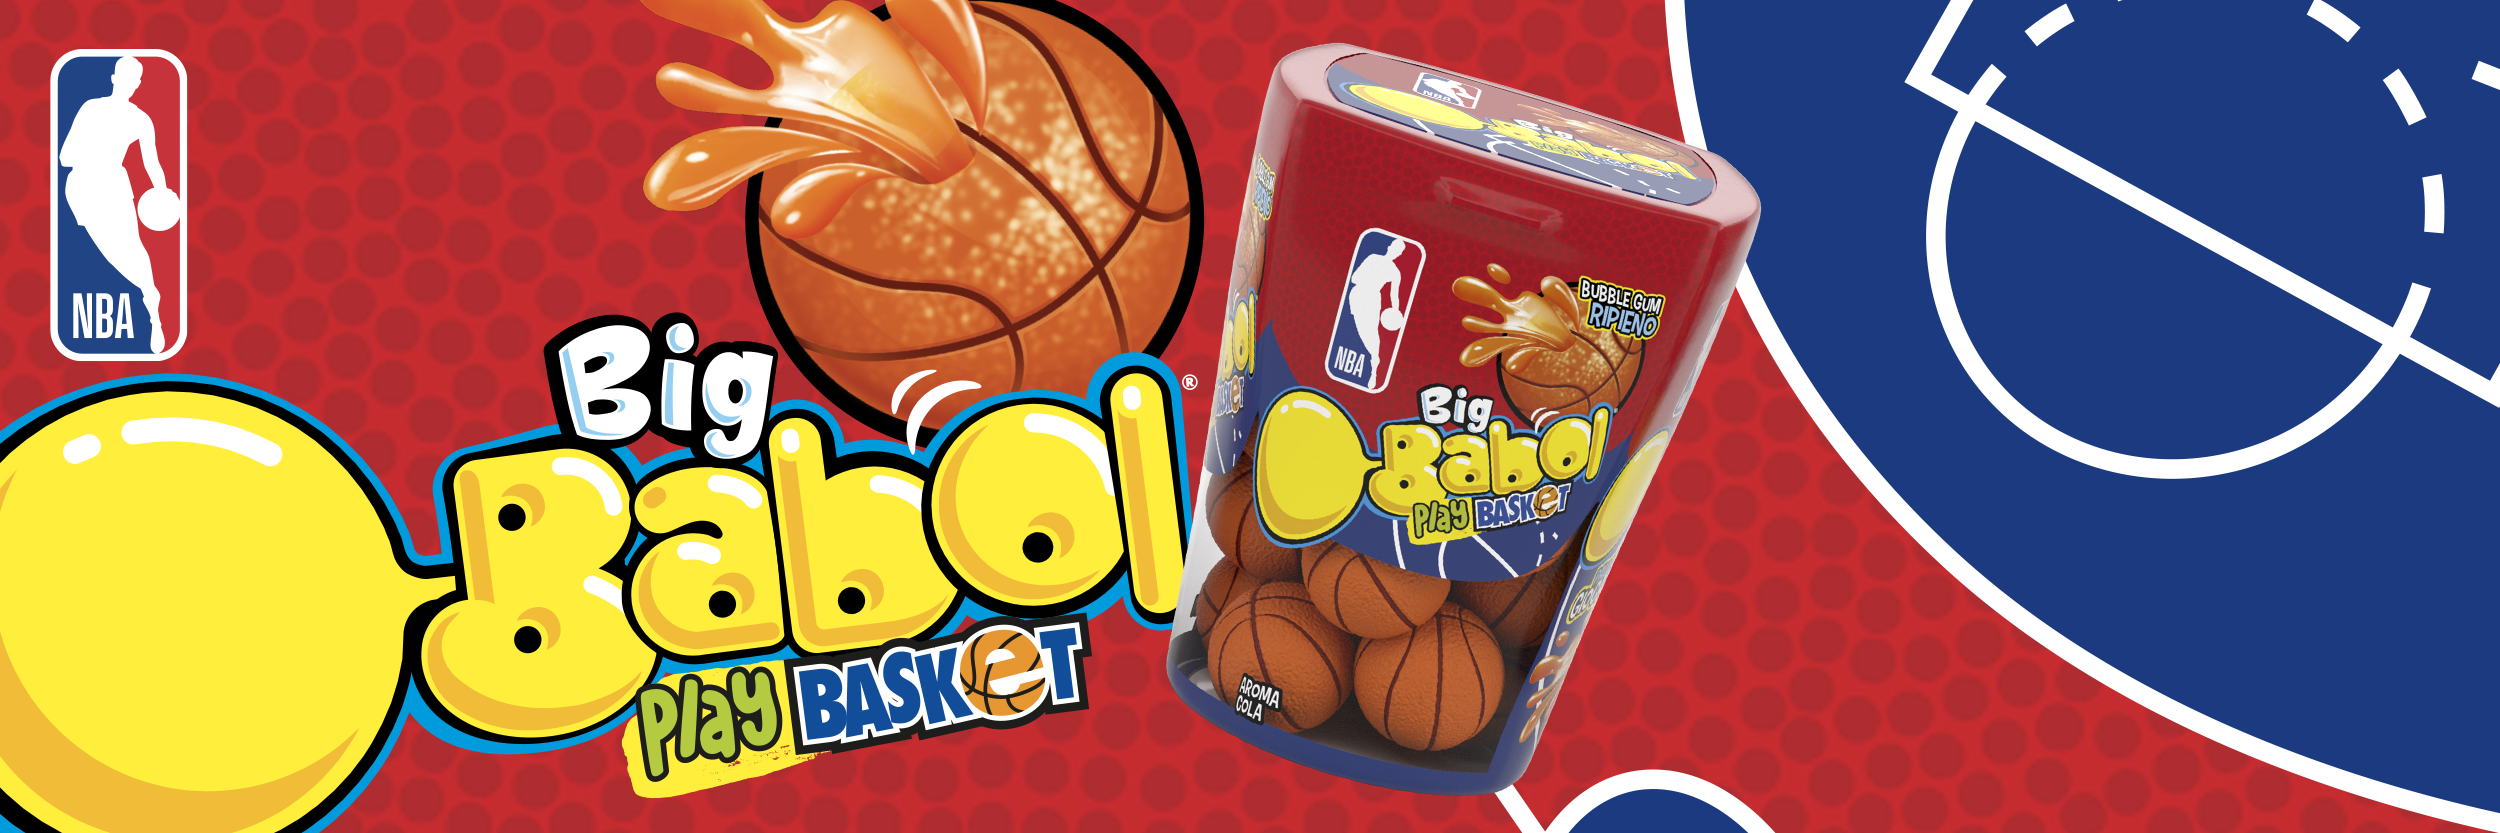 Big Babol Play Basket